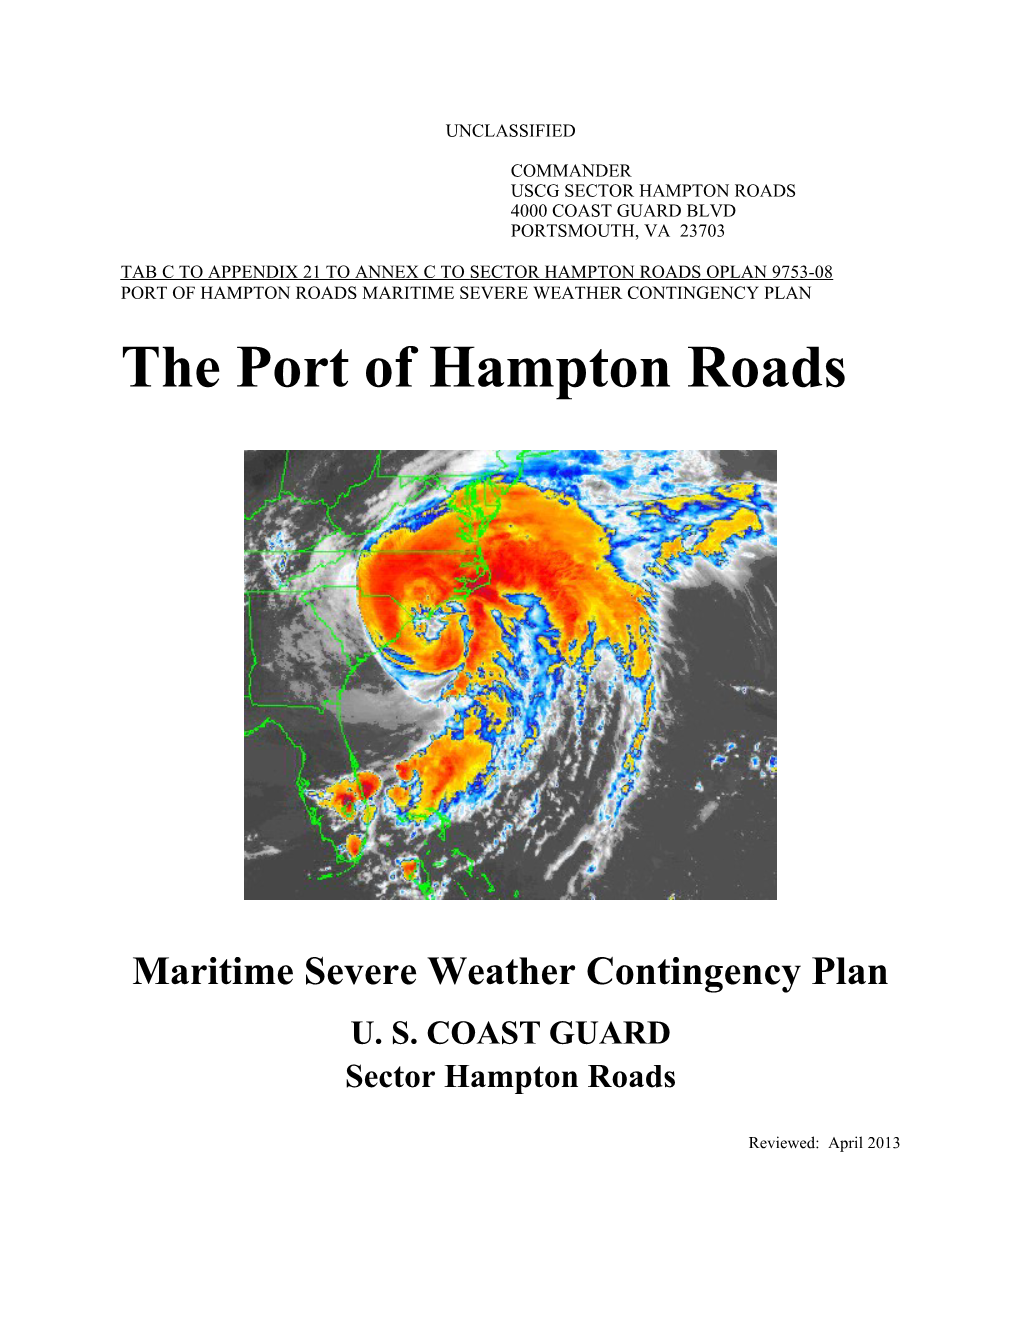 The Port of Hampton Roads